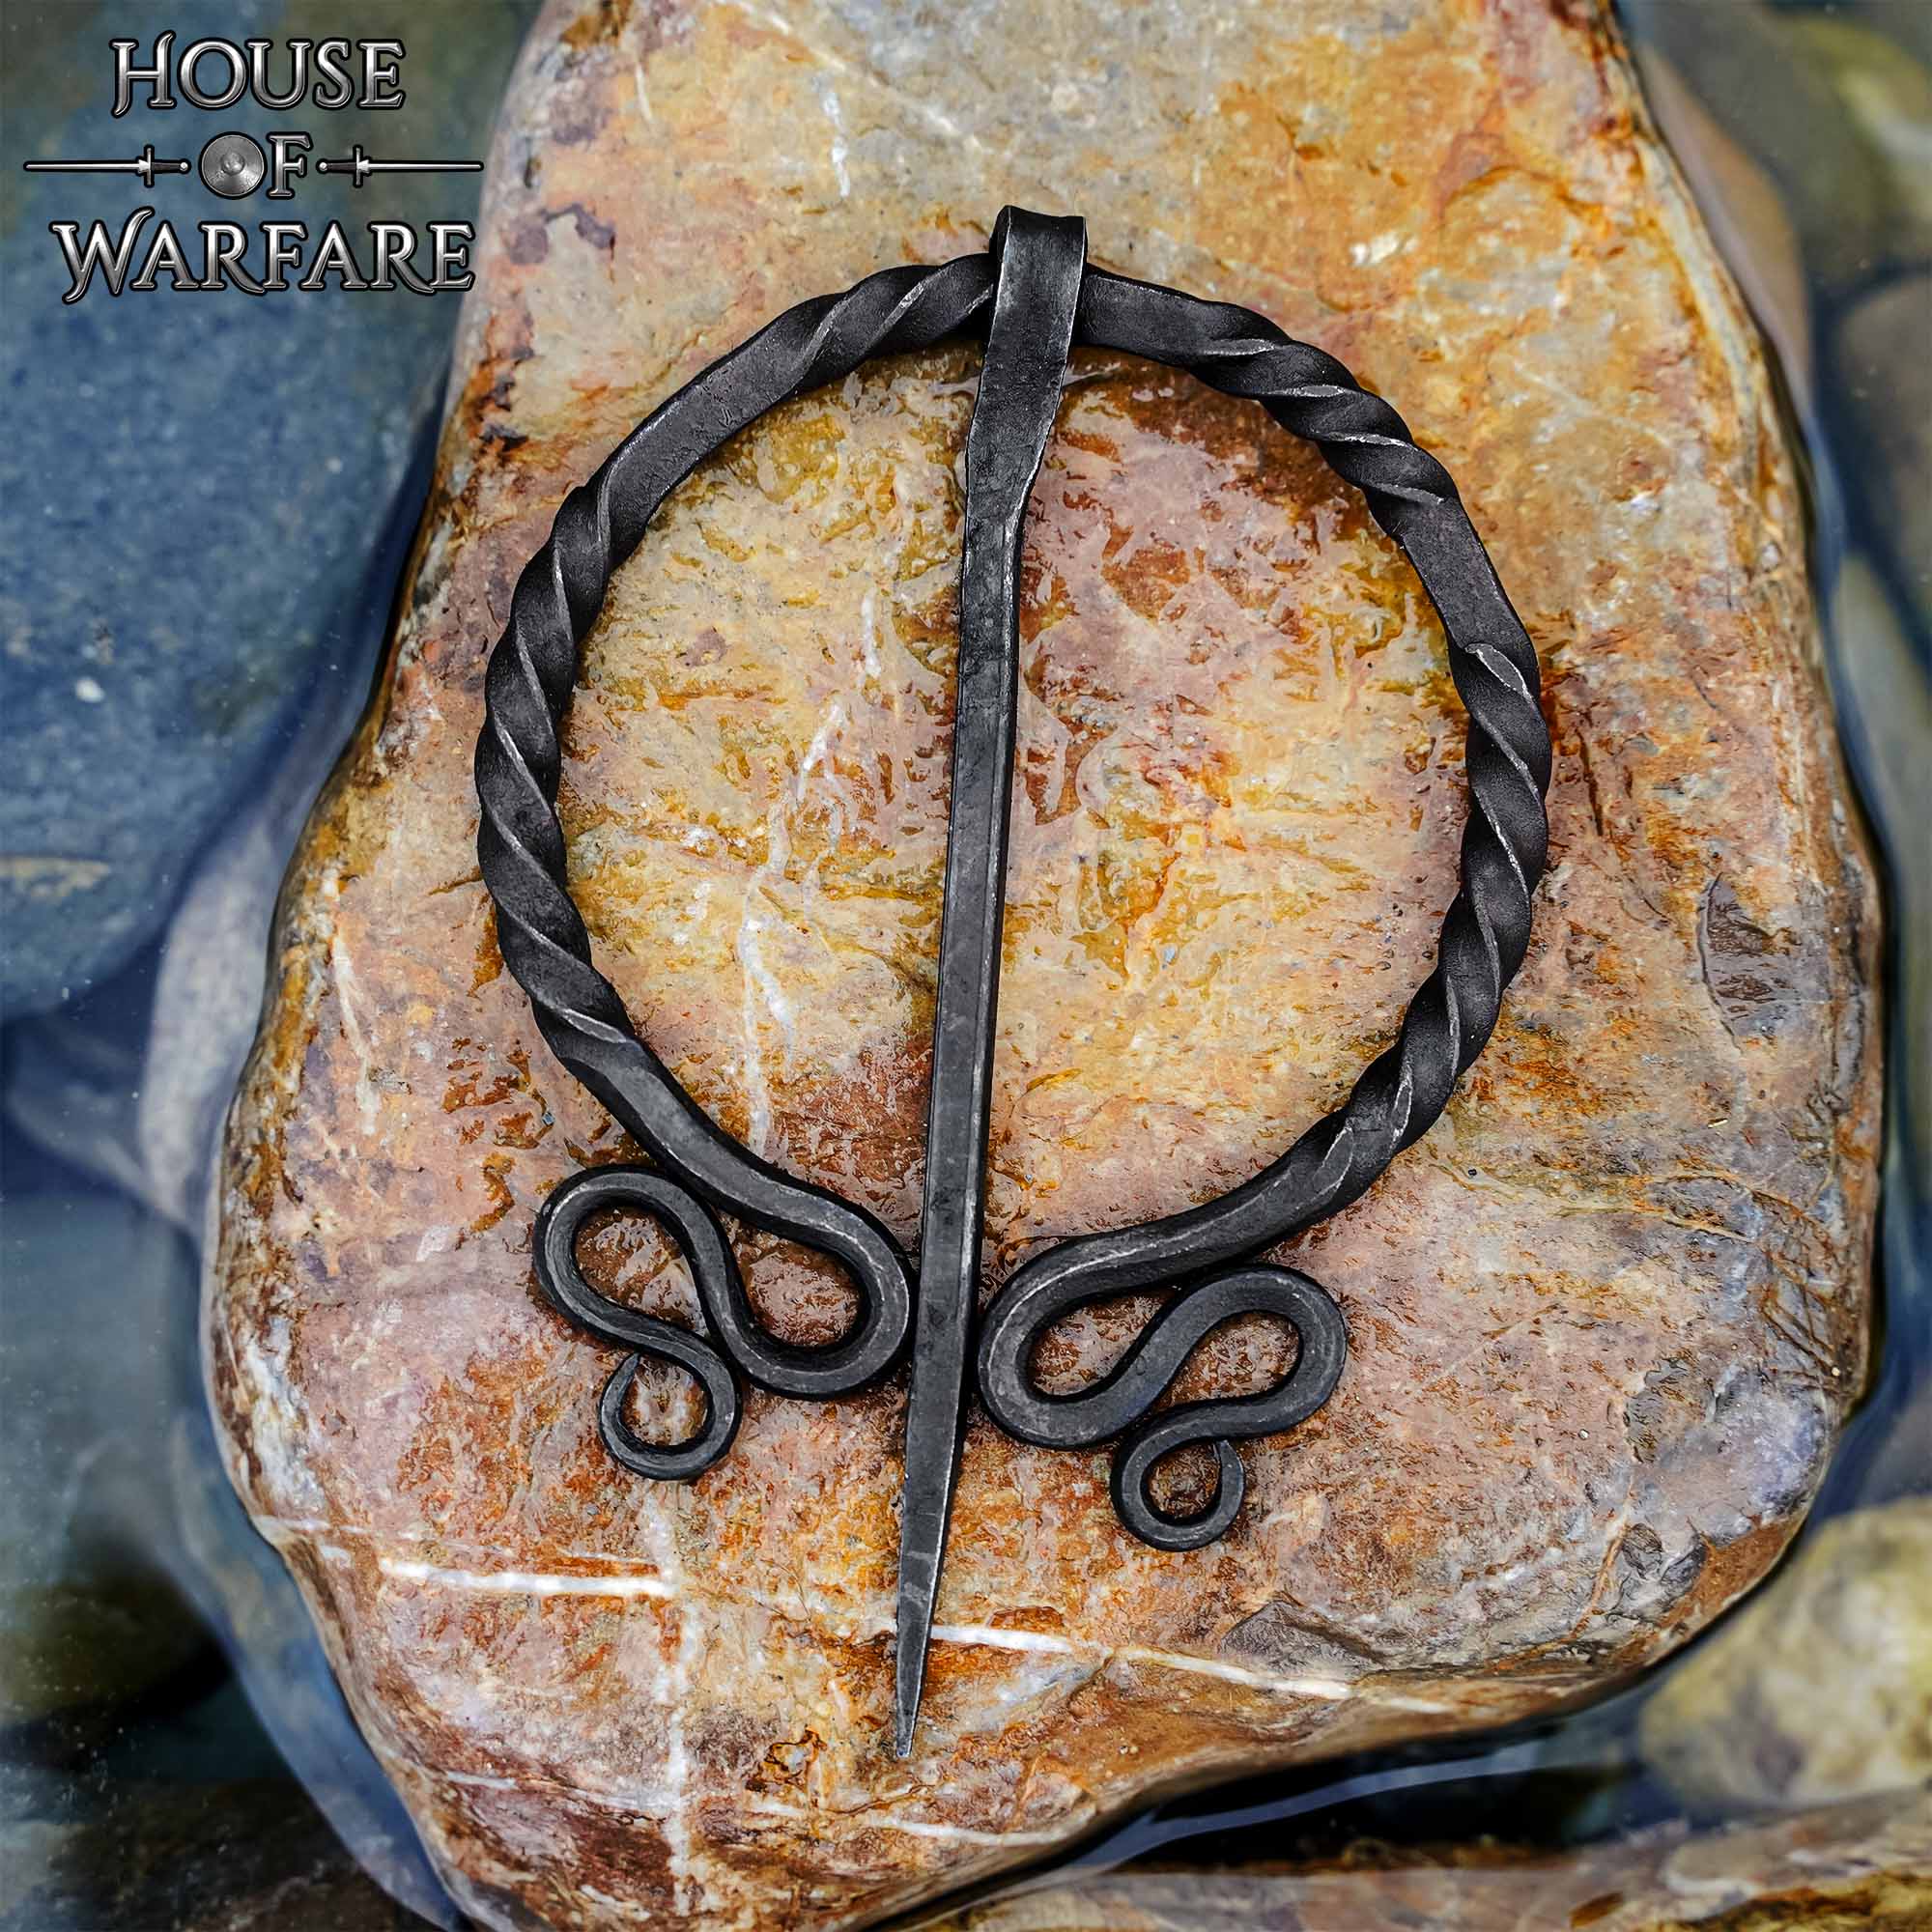 Medieval Brass Cloak Pin - Small Pennanular Fibula - MedieWorld